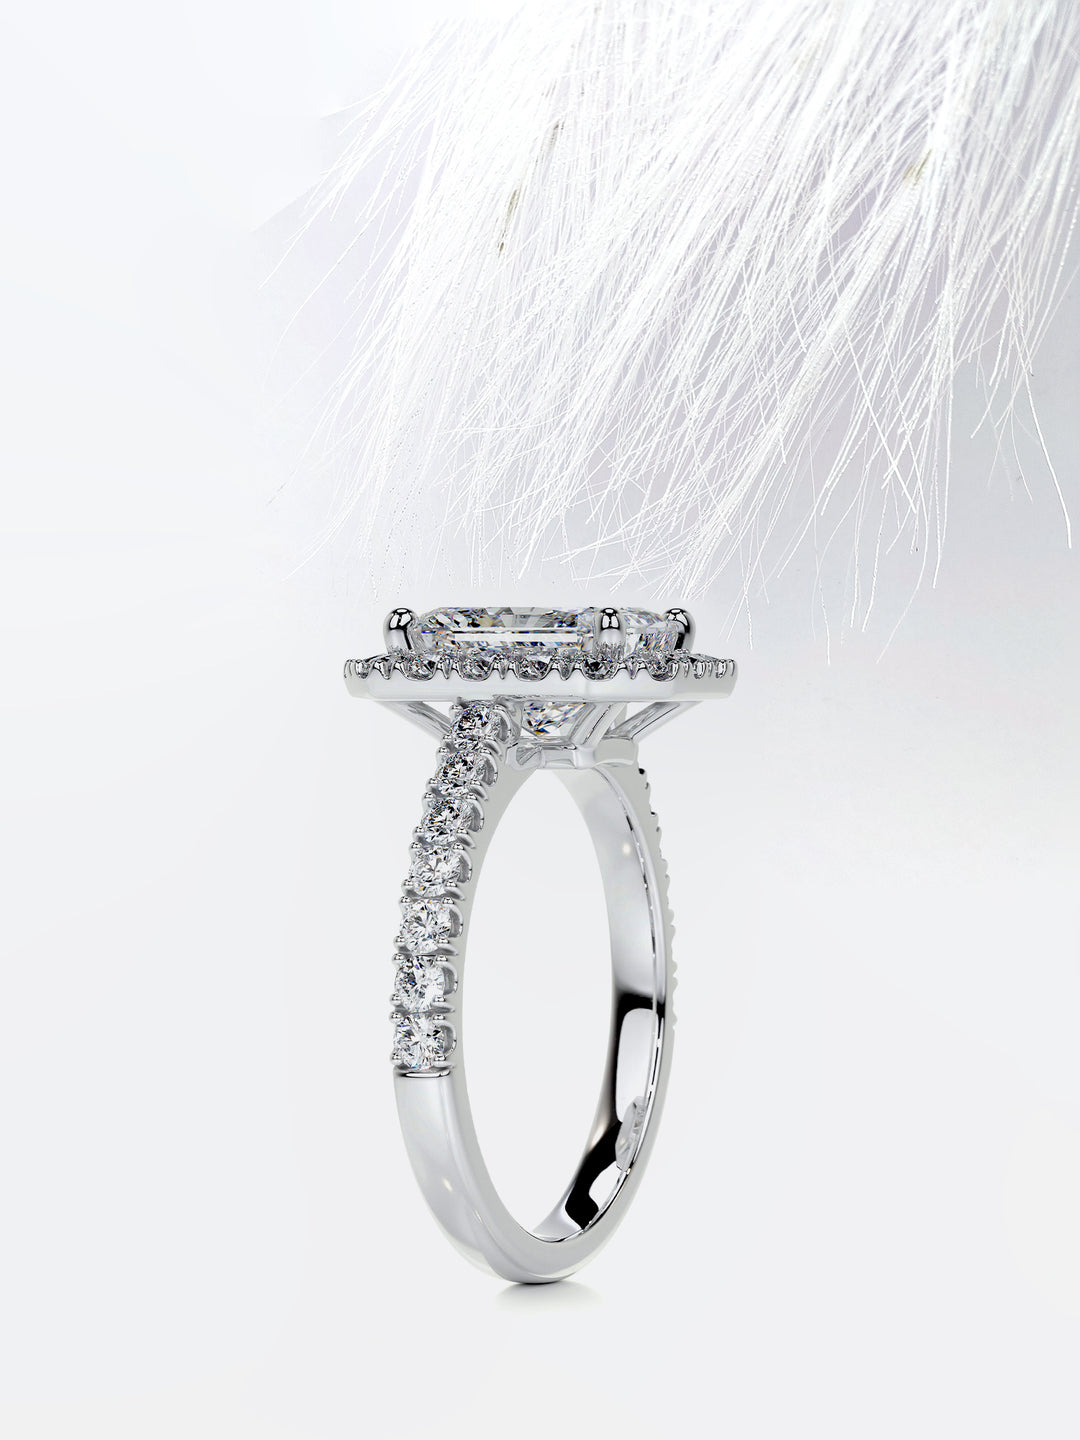 4.3TCW Radiant Cut Moissanite Halo Diamond Engagement Ring